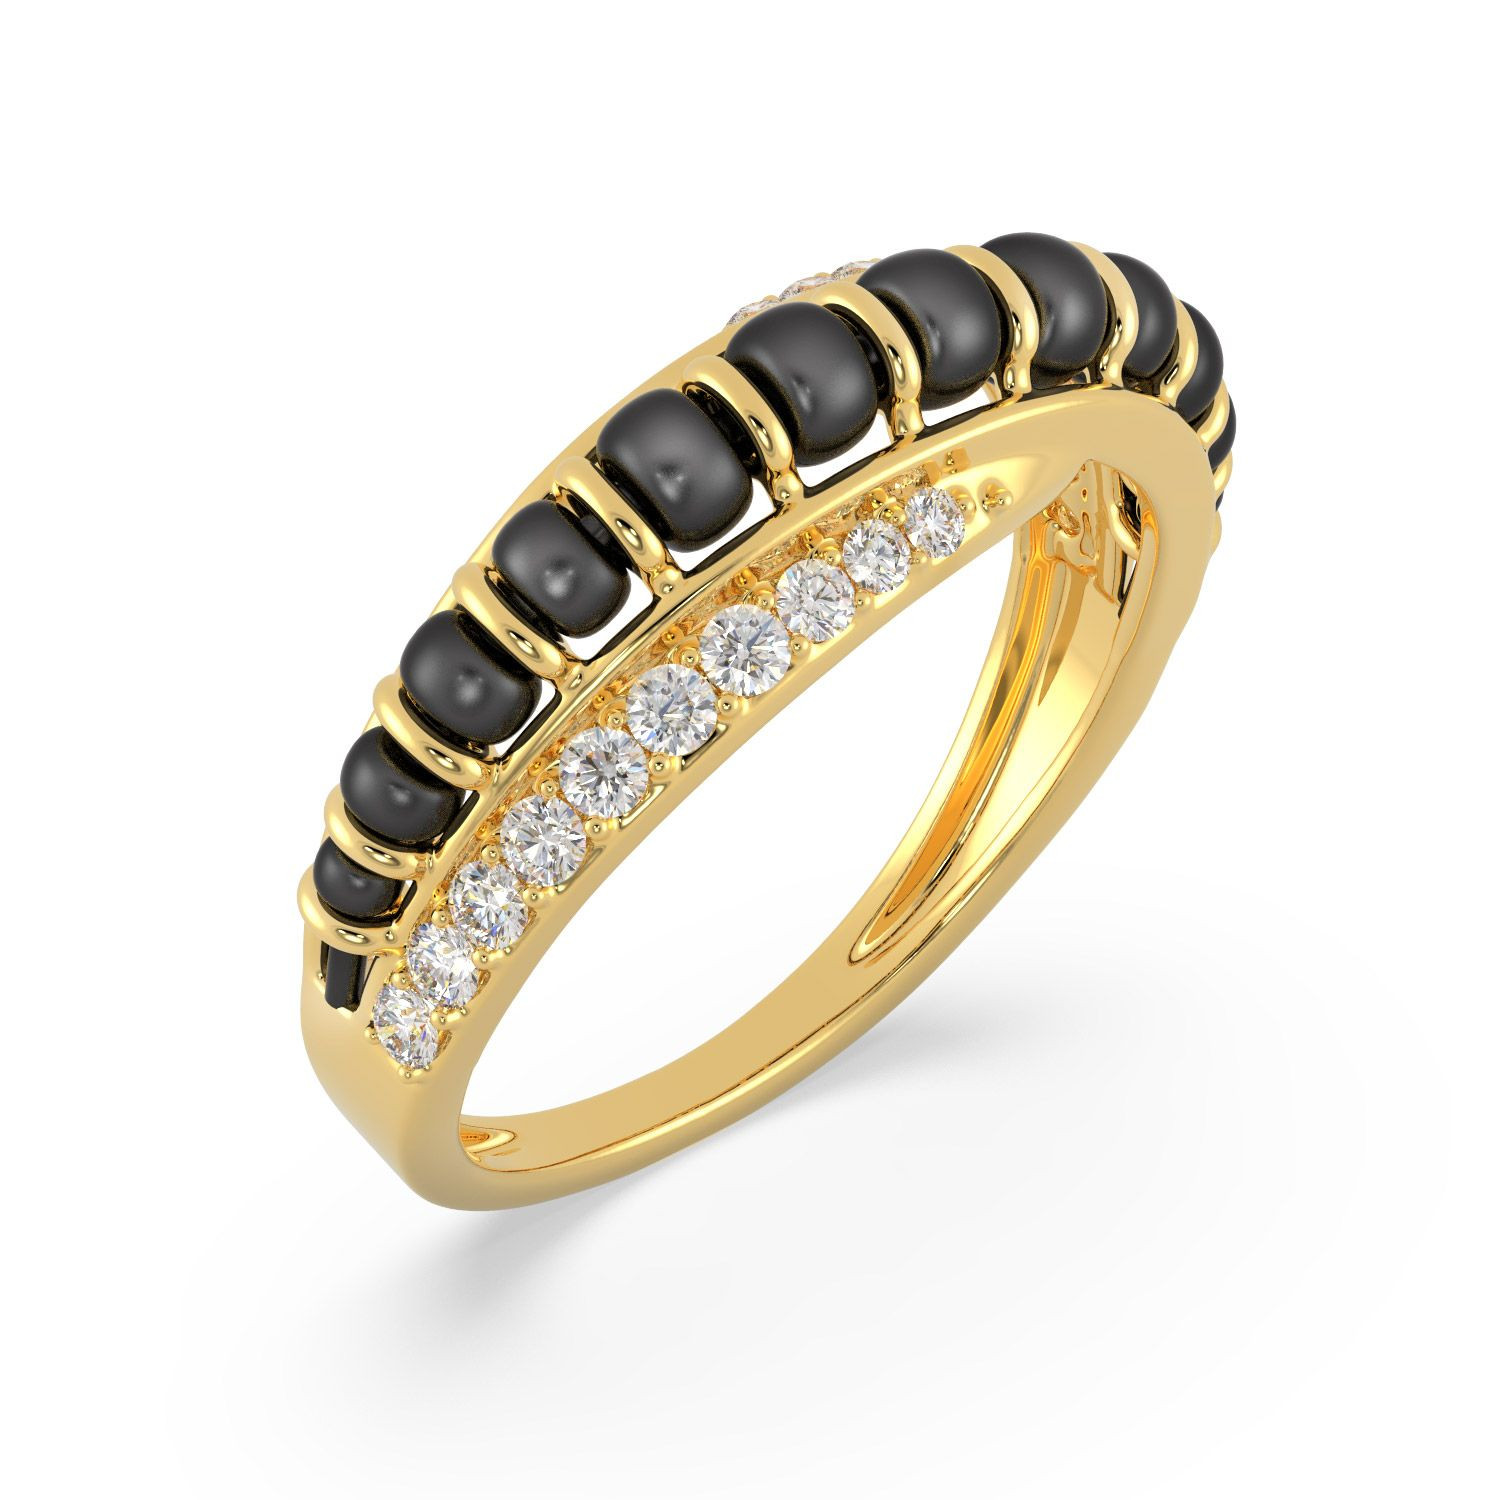 Malabar 22 KT Gold Studded Casual Ring ECRGSGDZ007